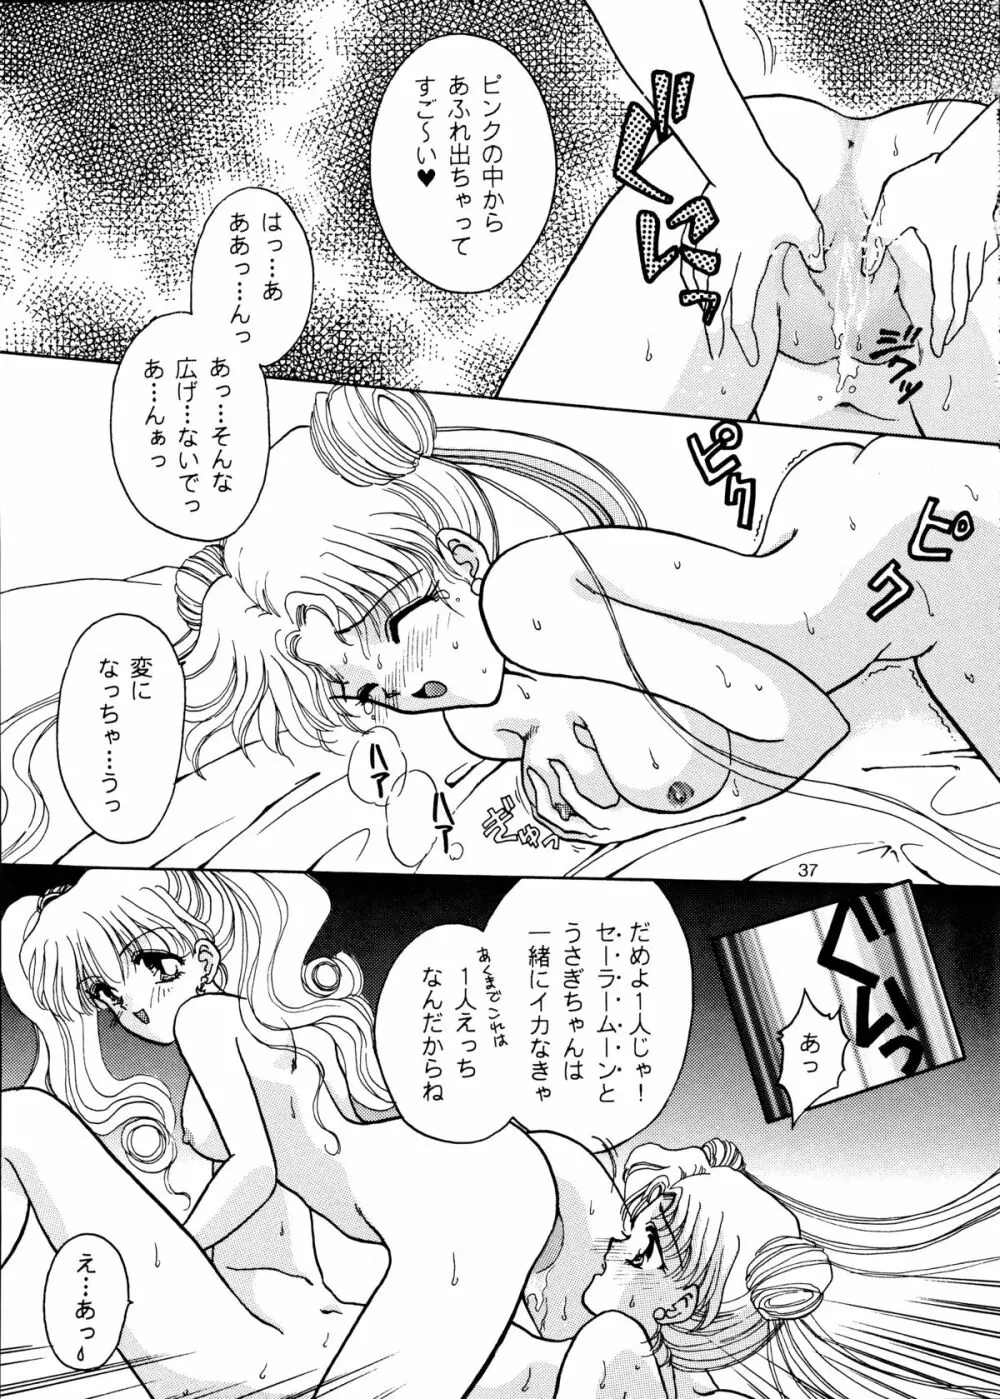 I KNOW MINAKO - page37